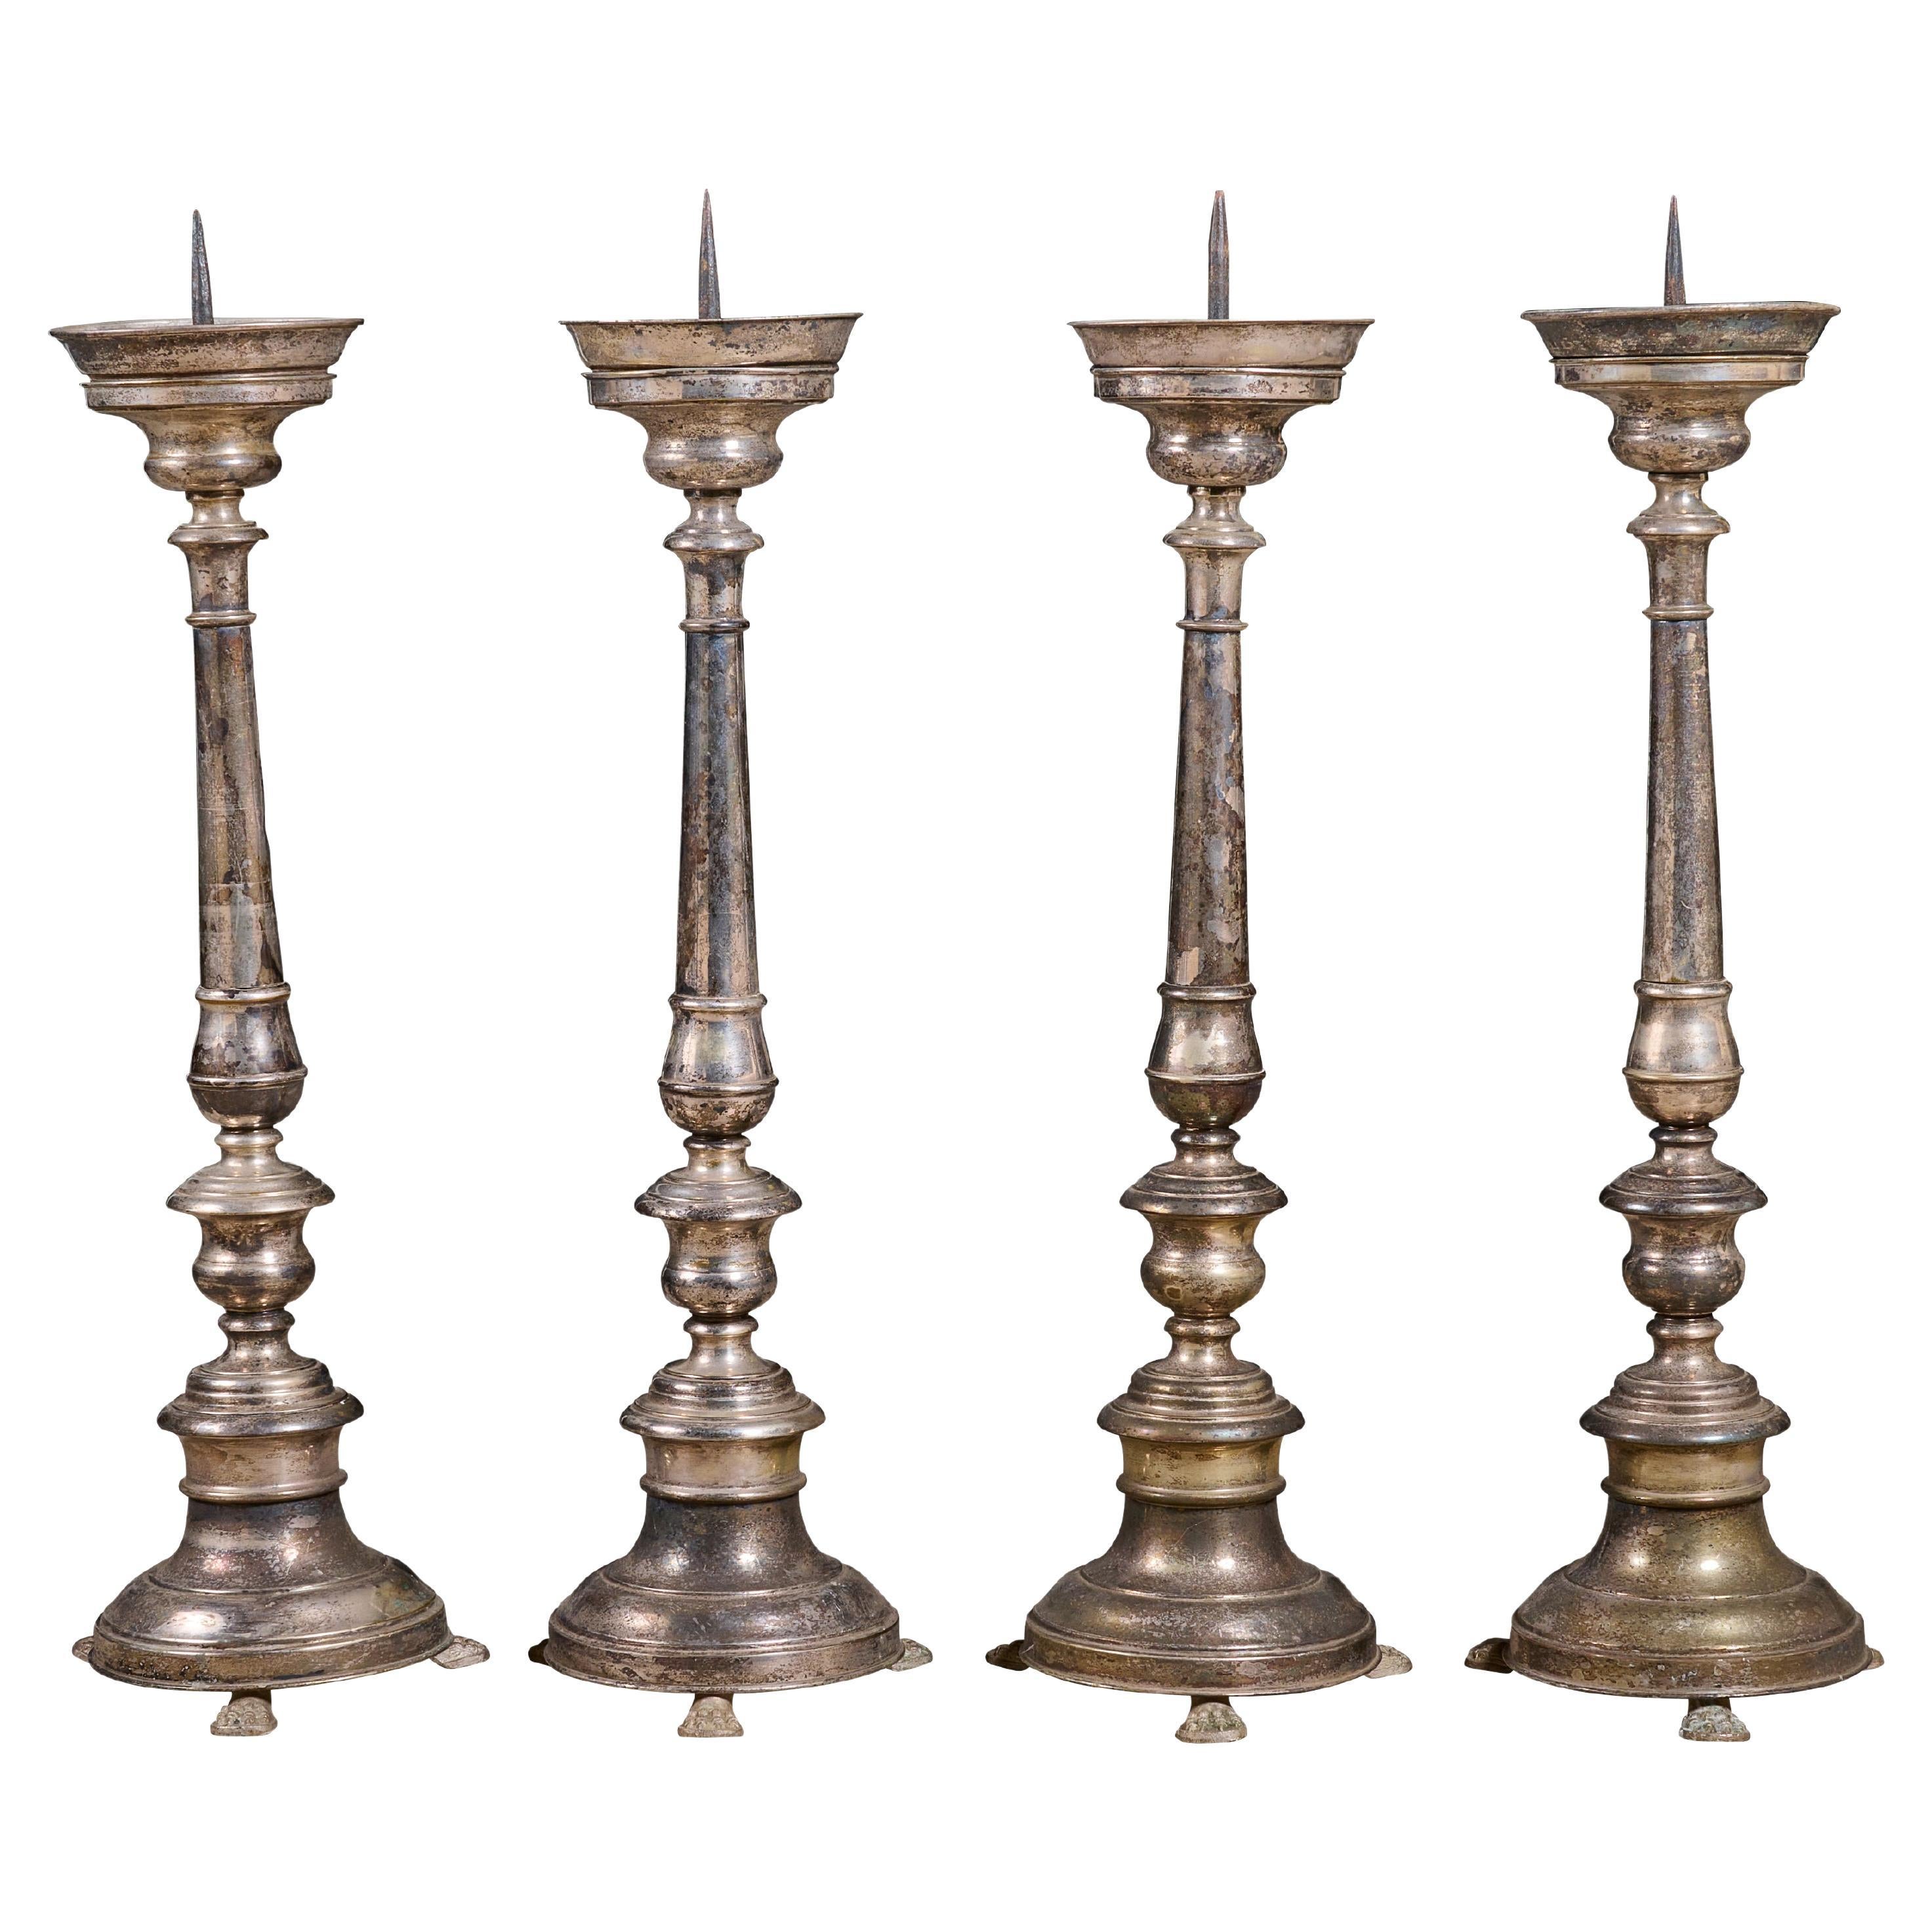 Set of Four Candle Sticks